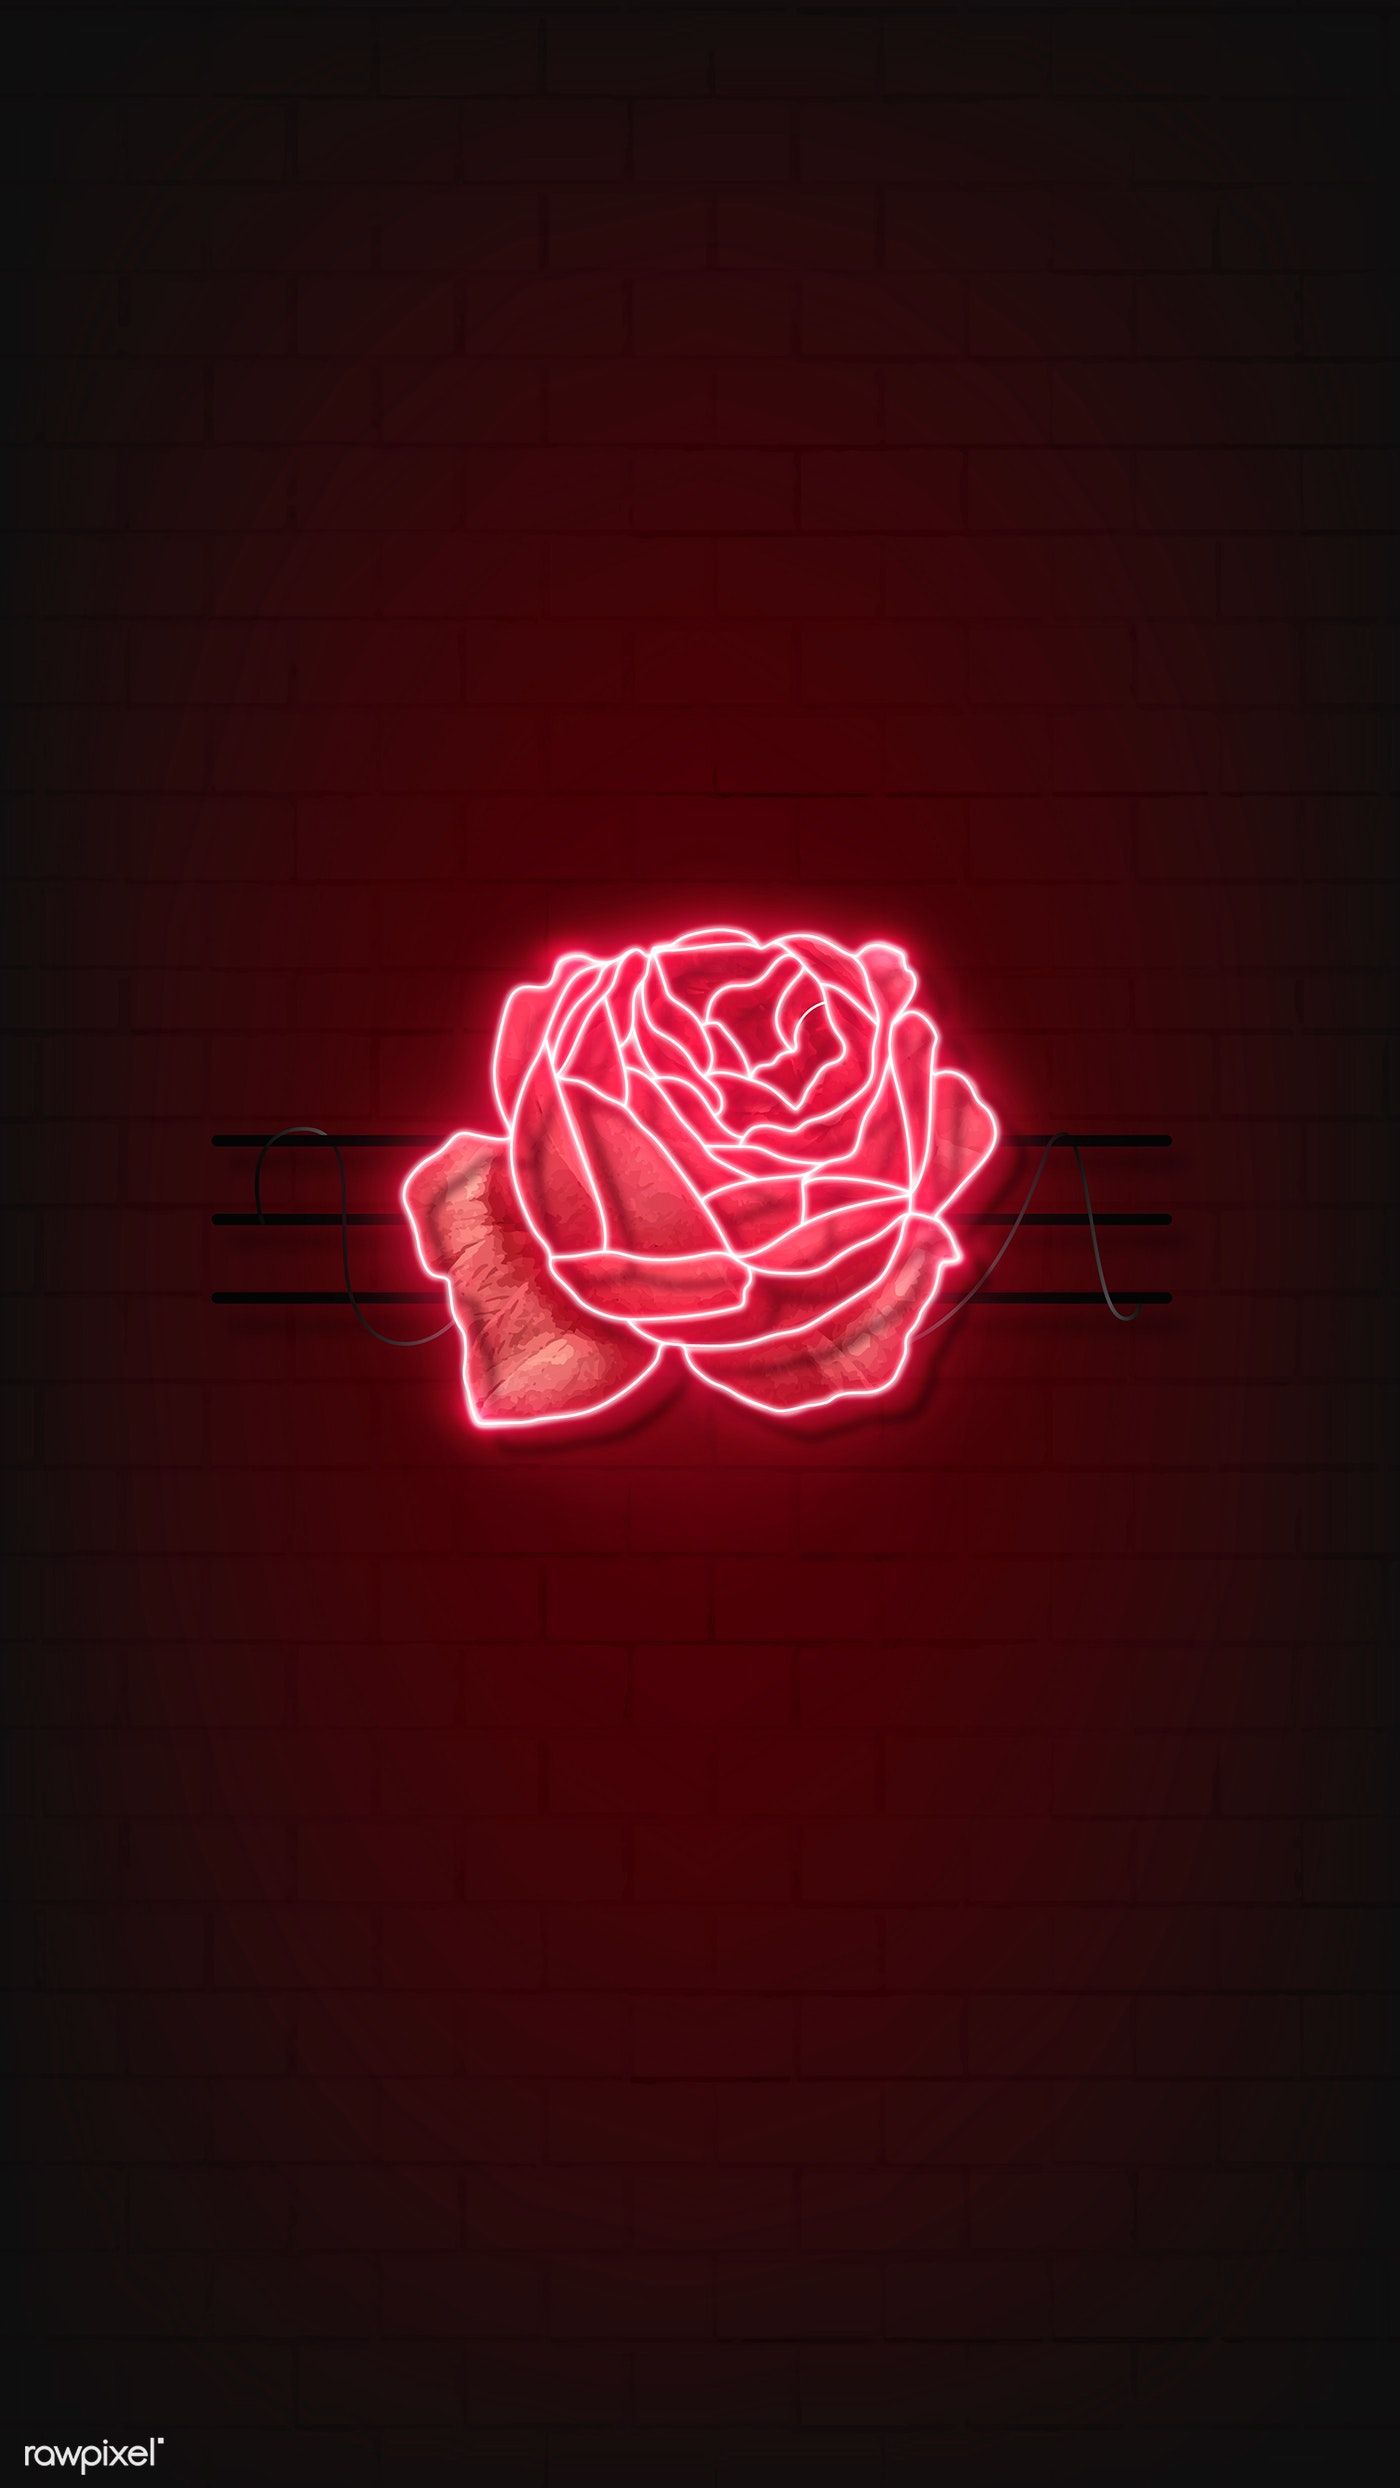 Red rose mobile wallpaper. Royalty free stock illustration